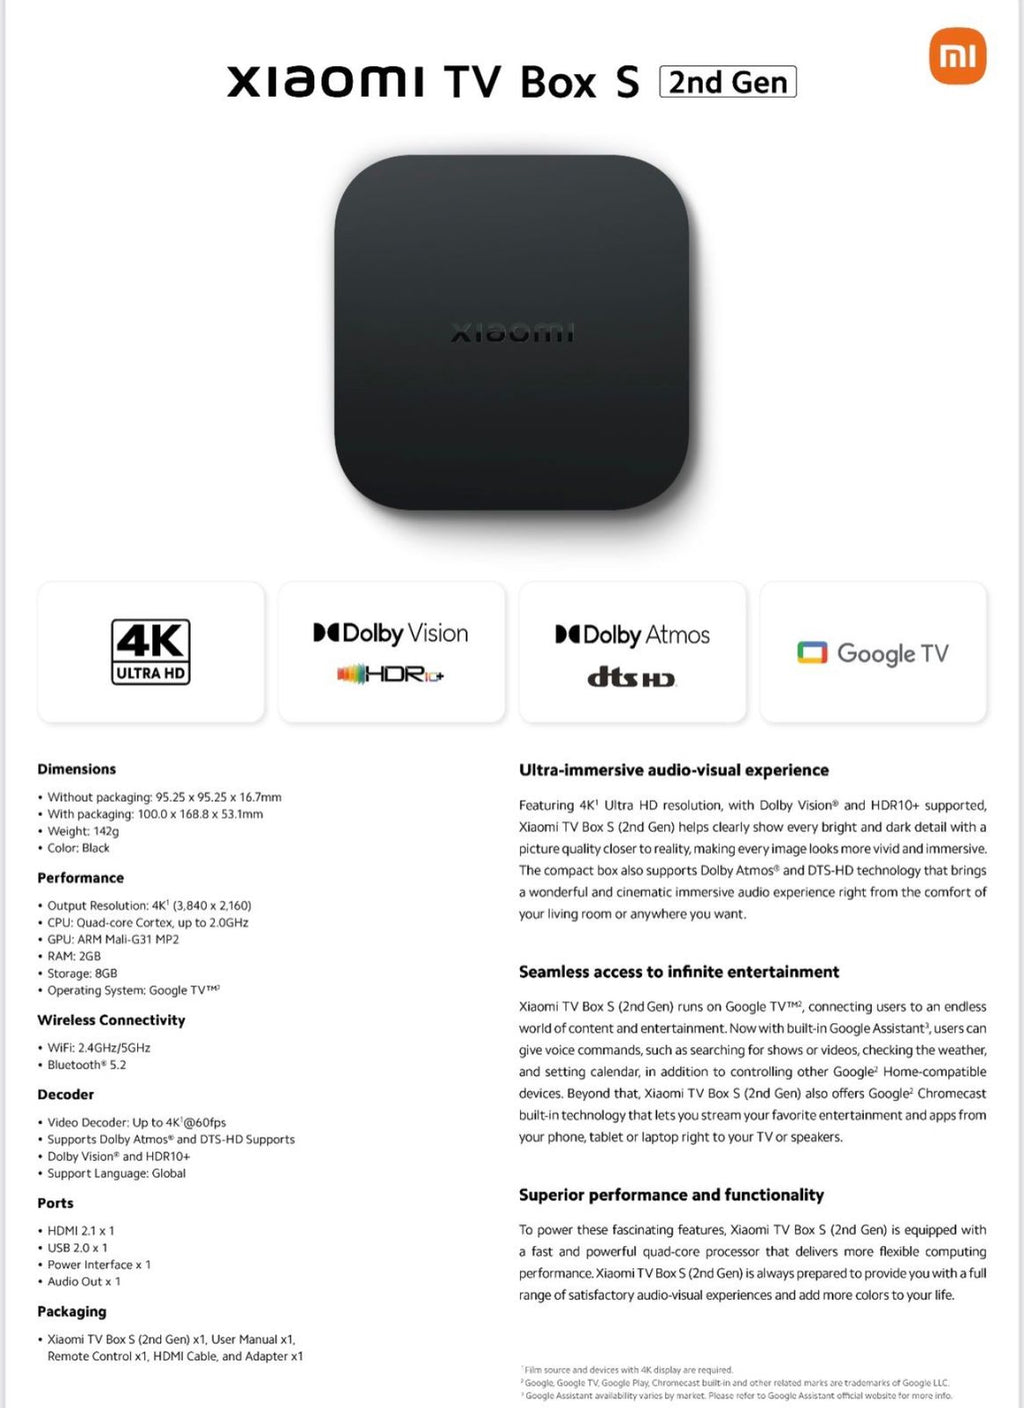  Xiaomi Mi Box S Android TV con Google Assistant Reproductor  multimedia de transmisión remota - Chromecast incorporado - 4K HDR - Wi-Fi  - 8 GB - Negro : Electrónica